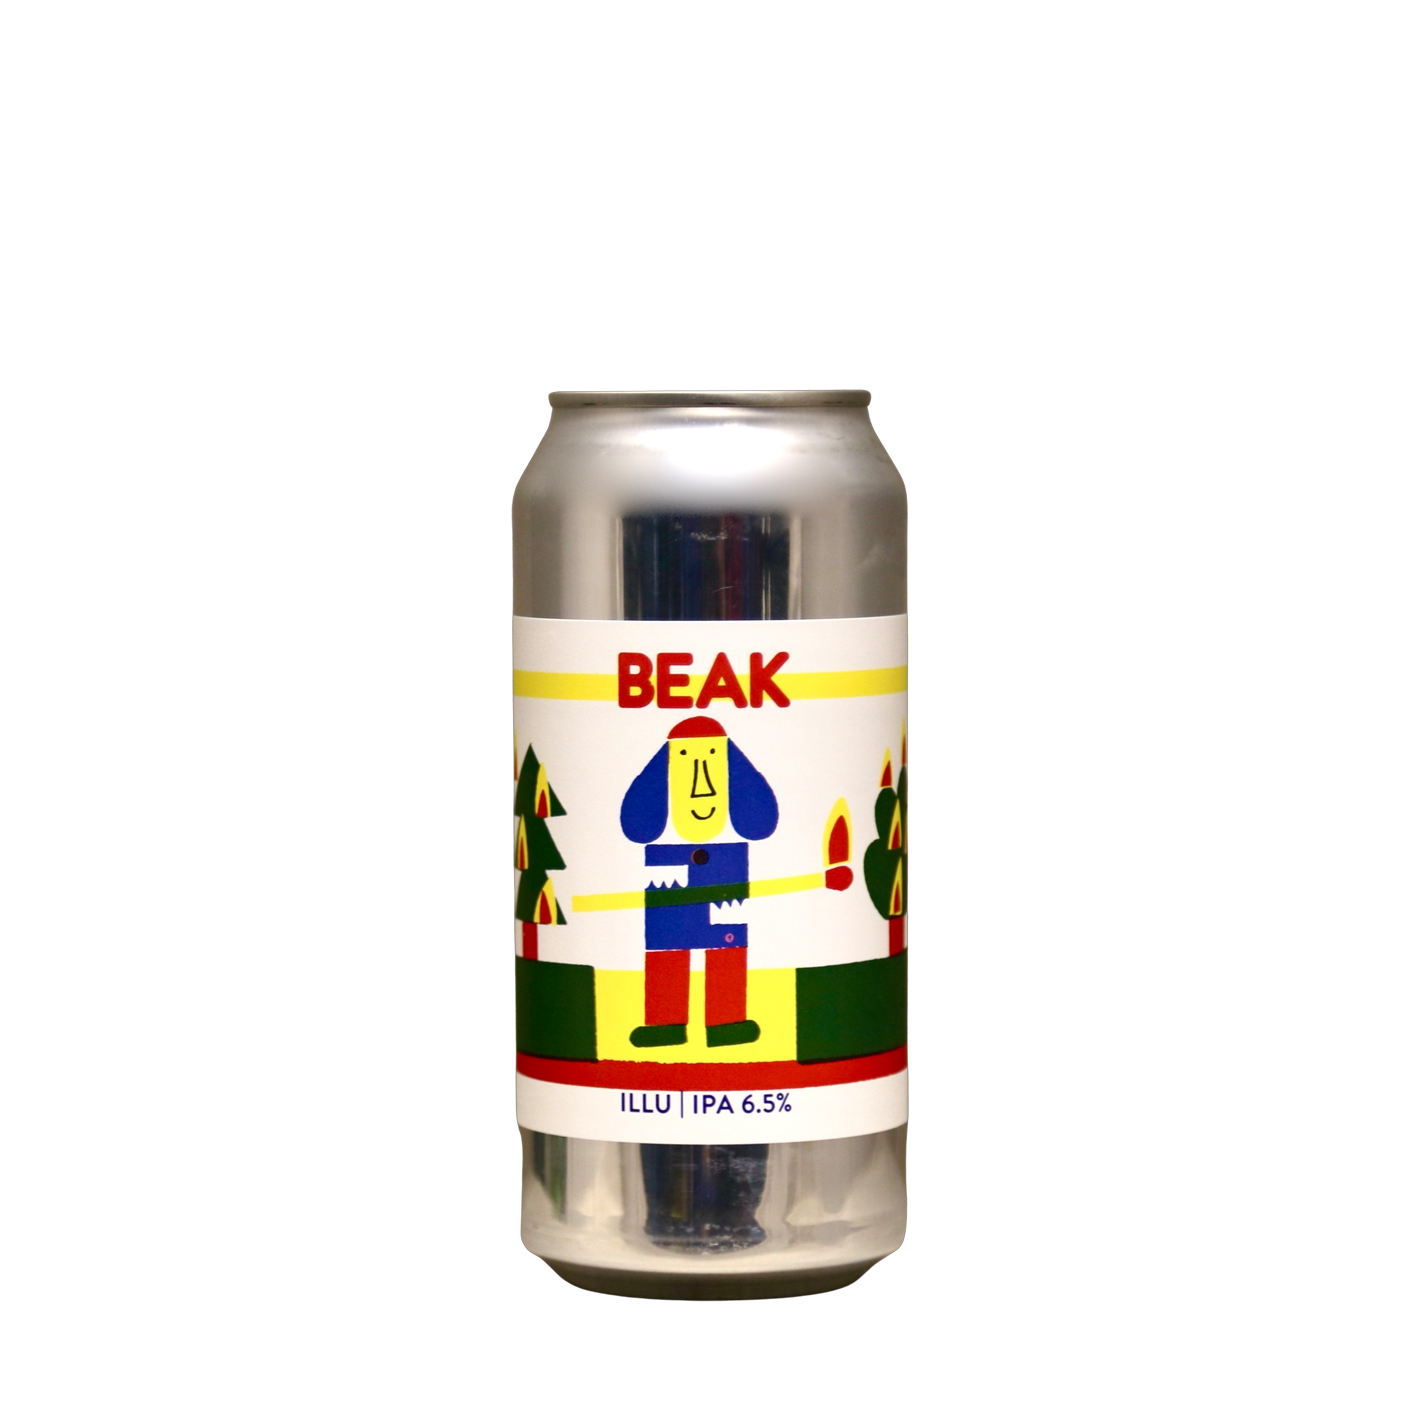 Beak Brewery - Illu Ipa 